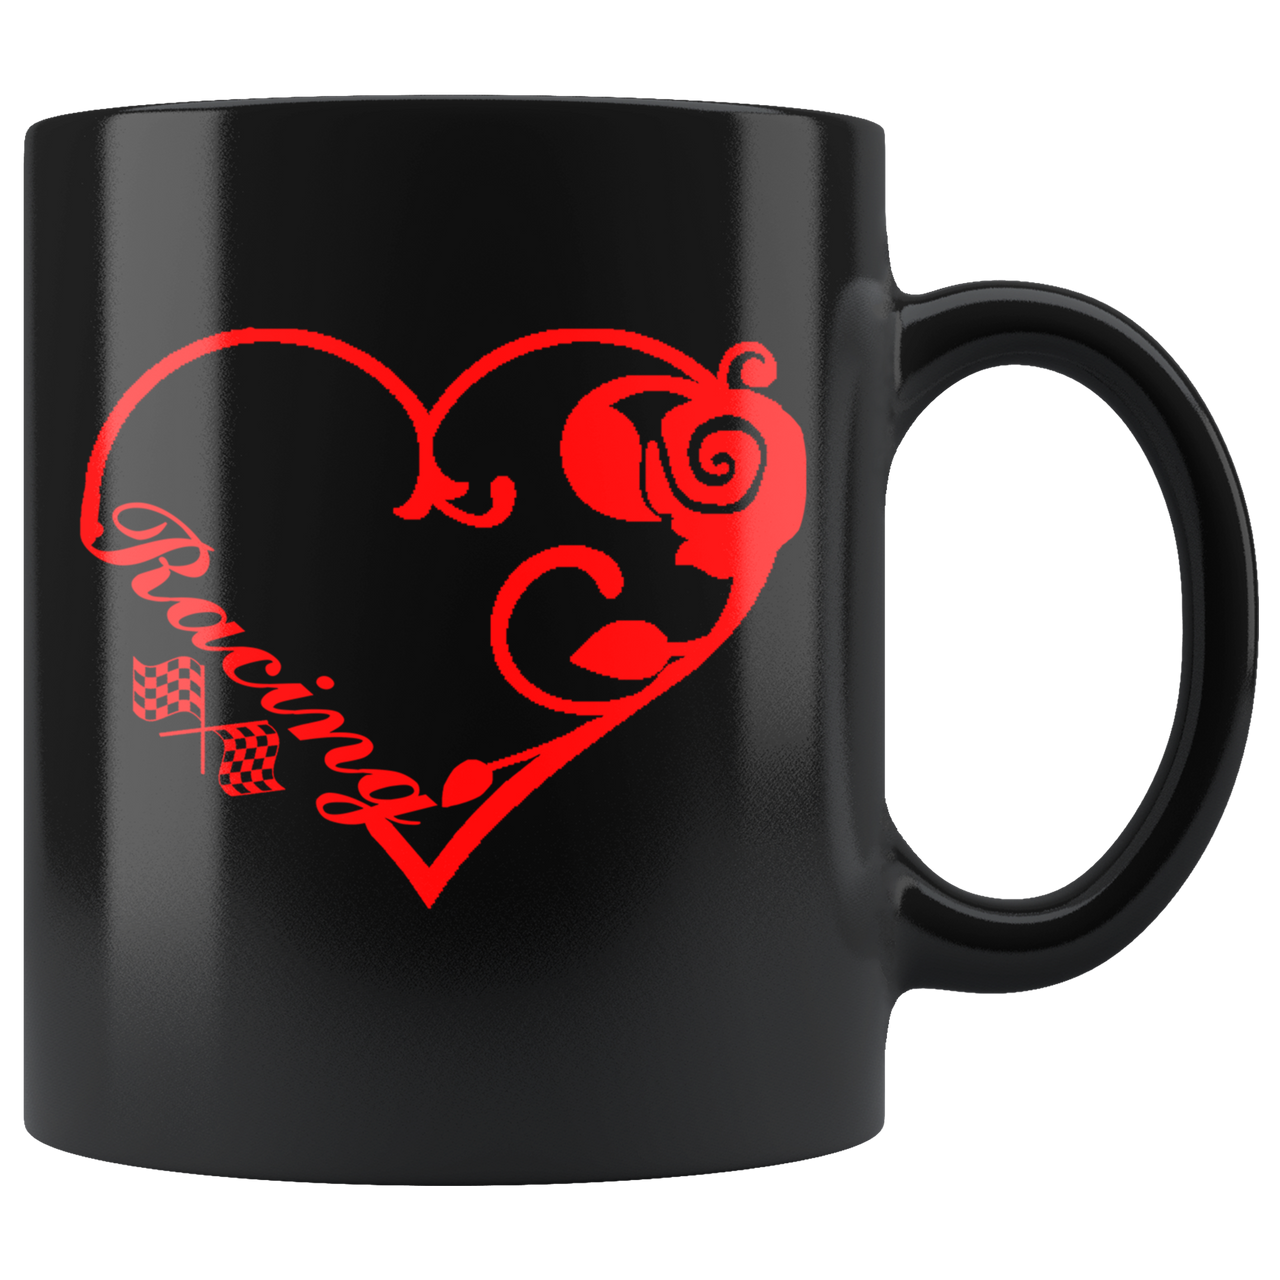 Racing Heart Red Mug!